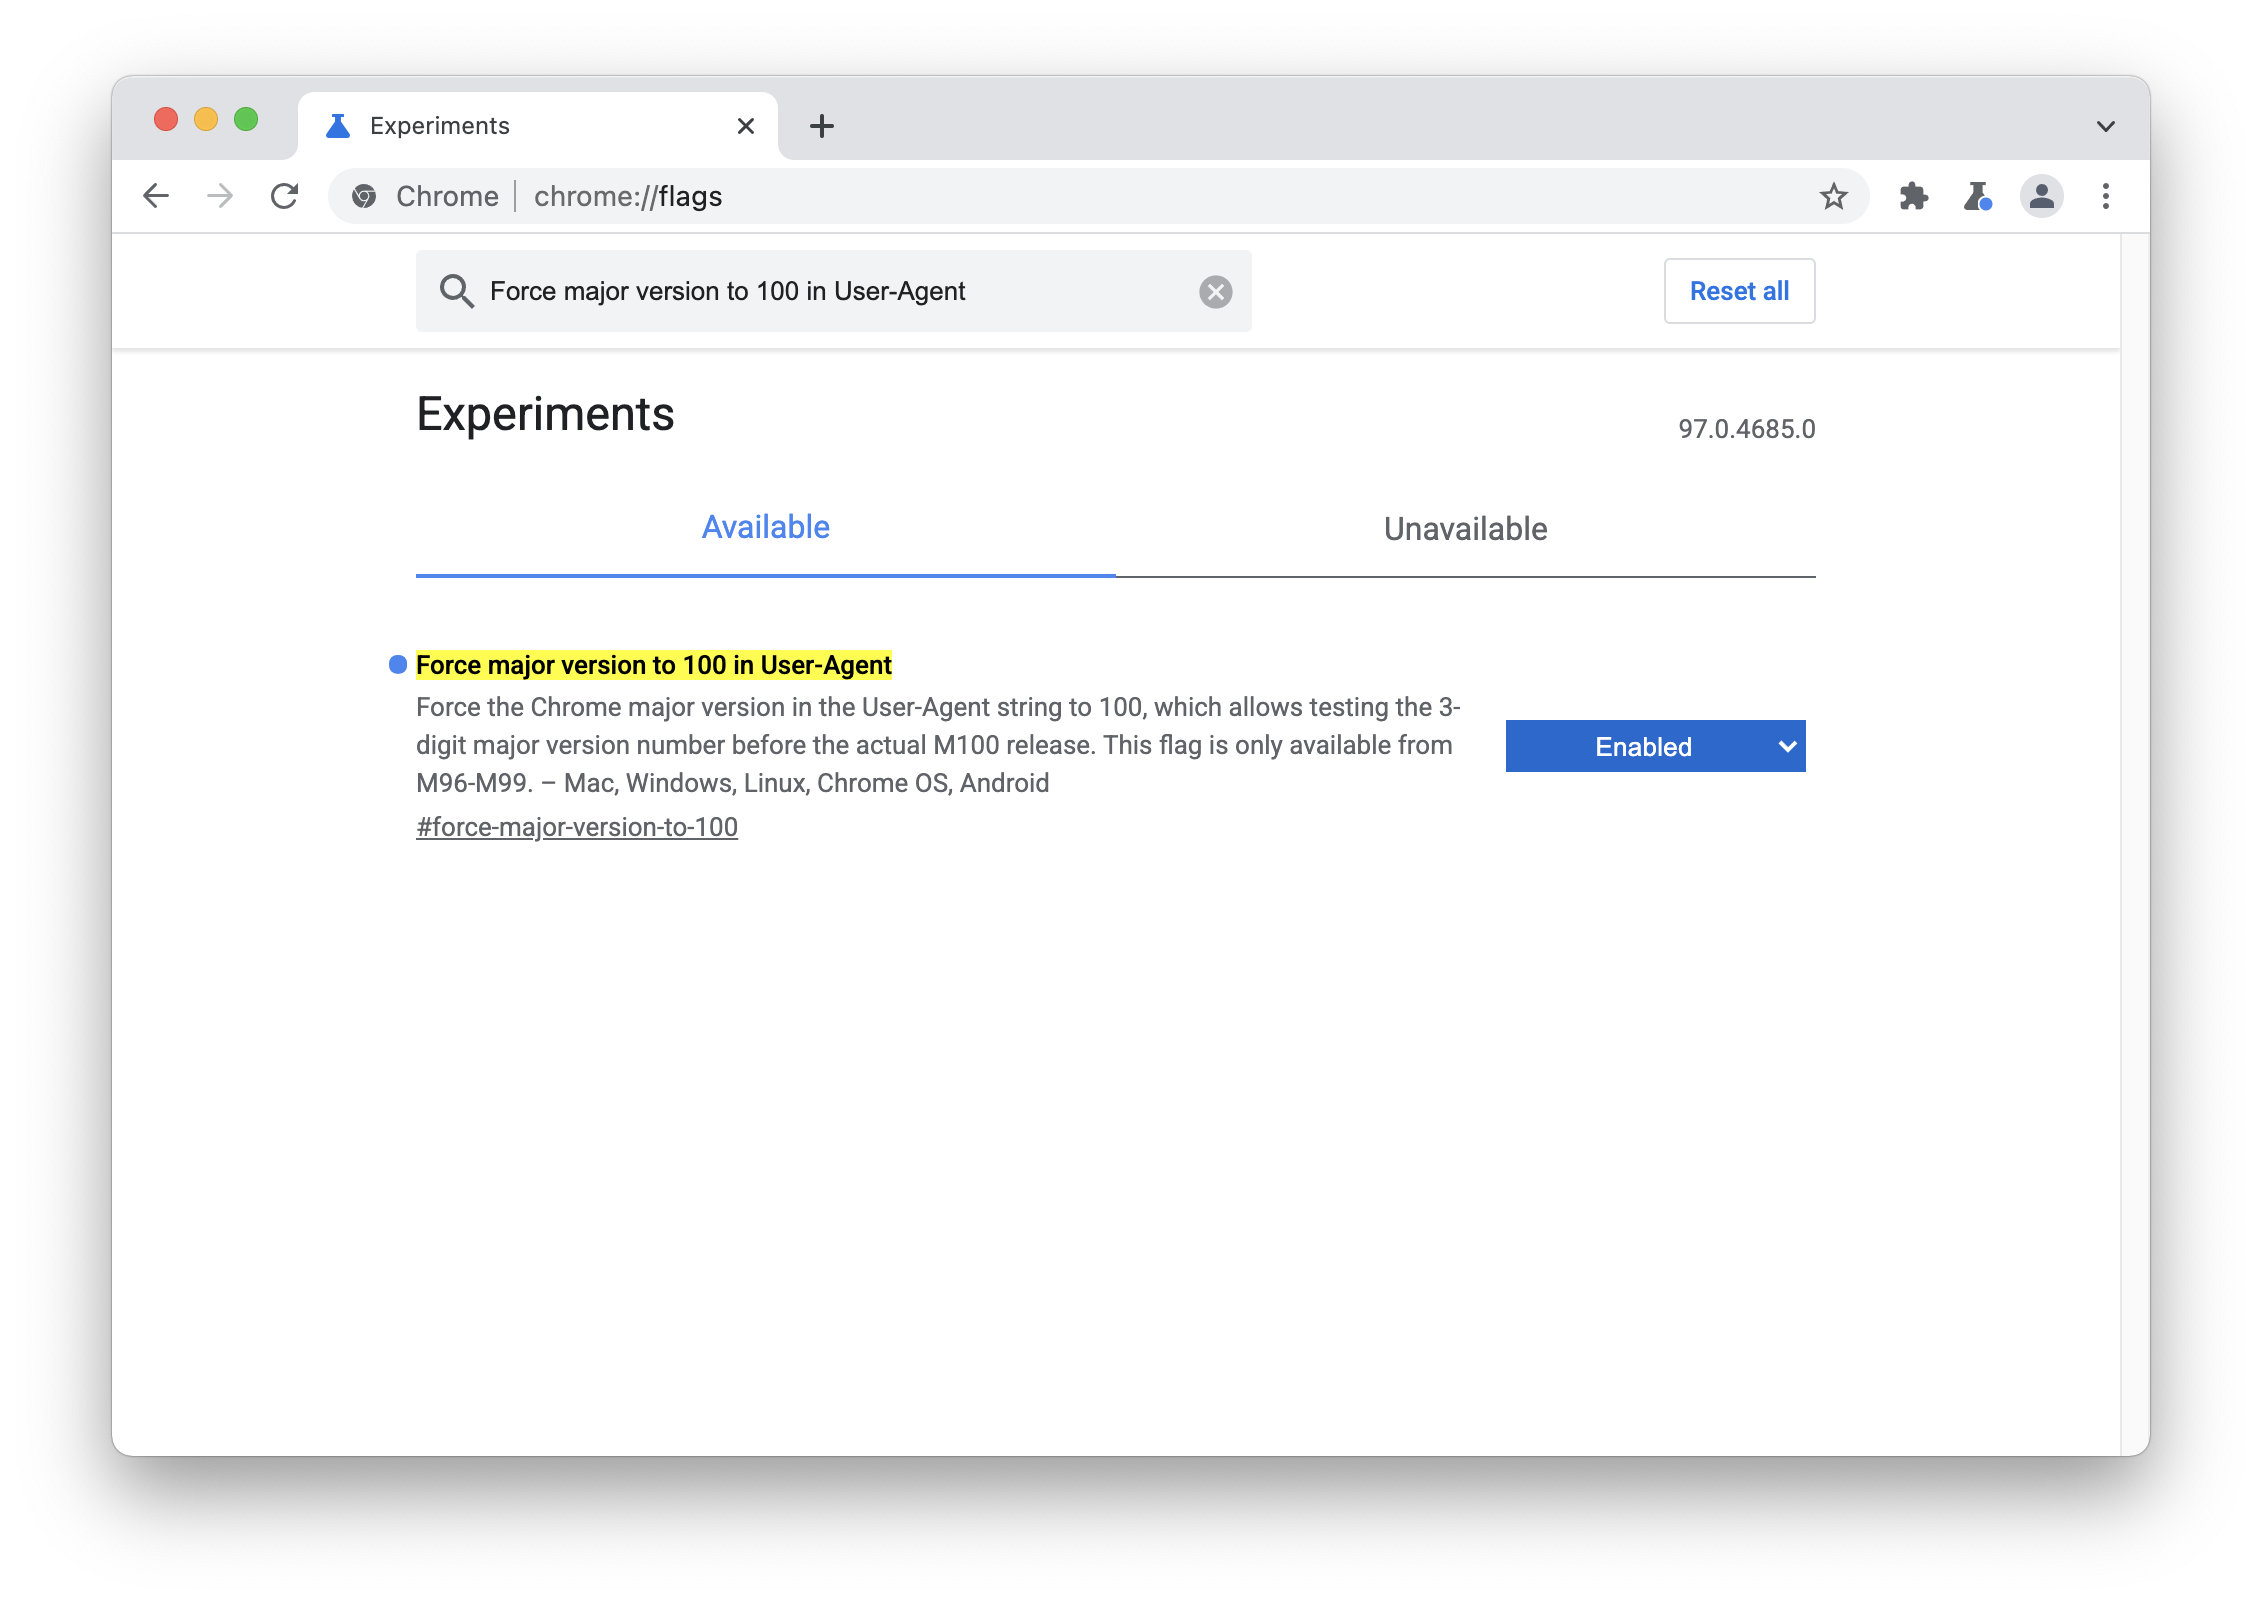 Chrome flag 页面，该页面显示了已将 User-Agent 中强制将主要版本强制设为 100 的功能。